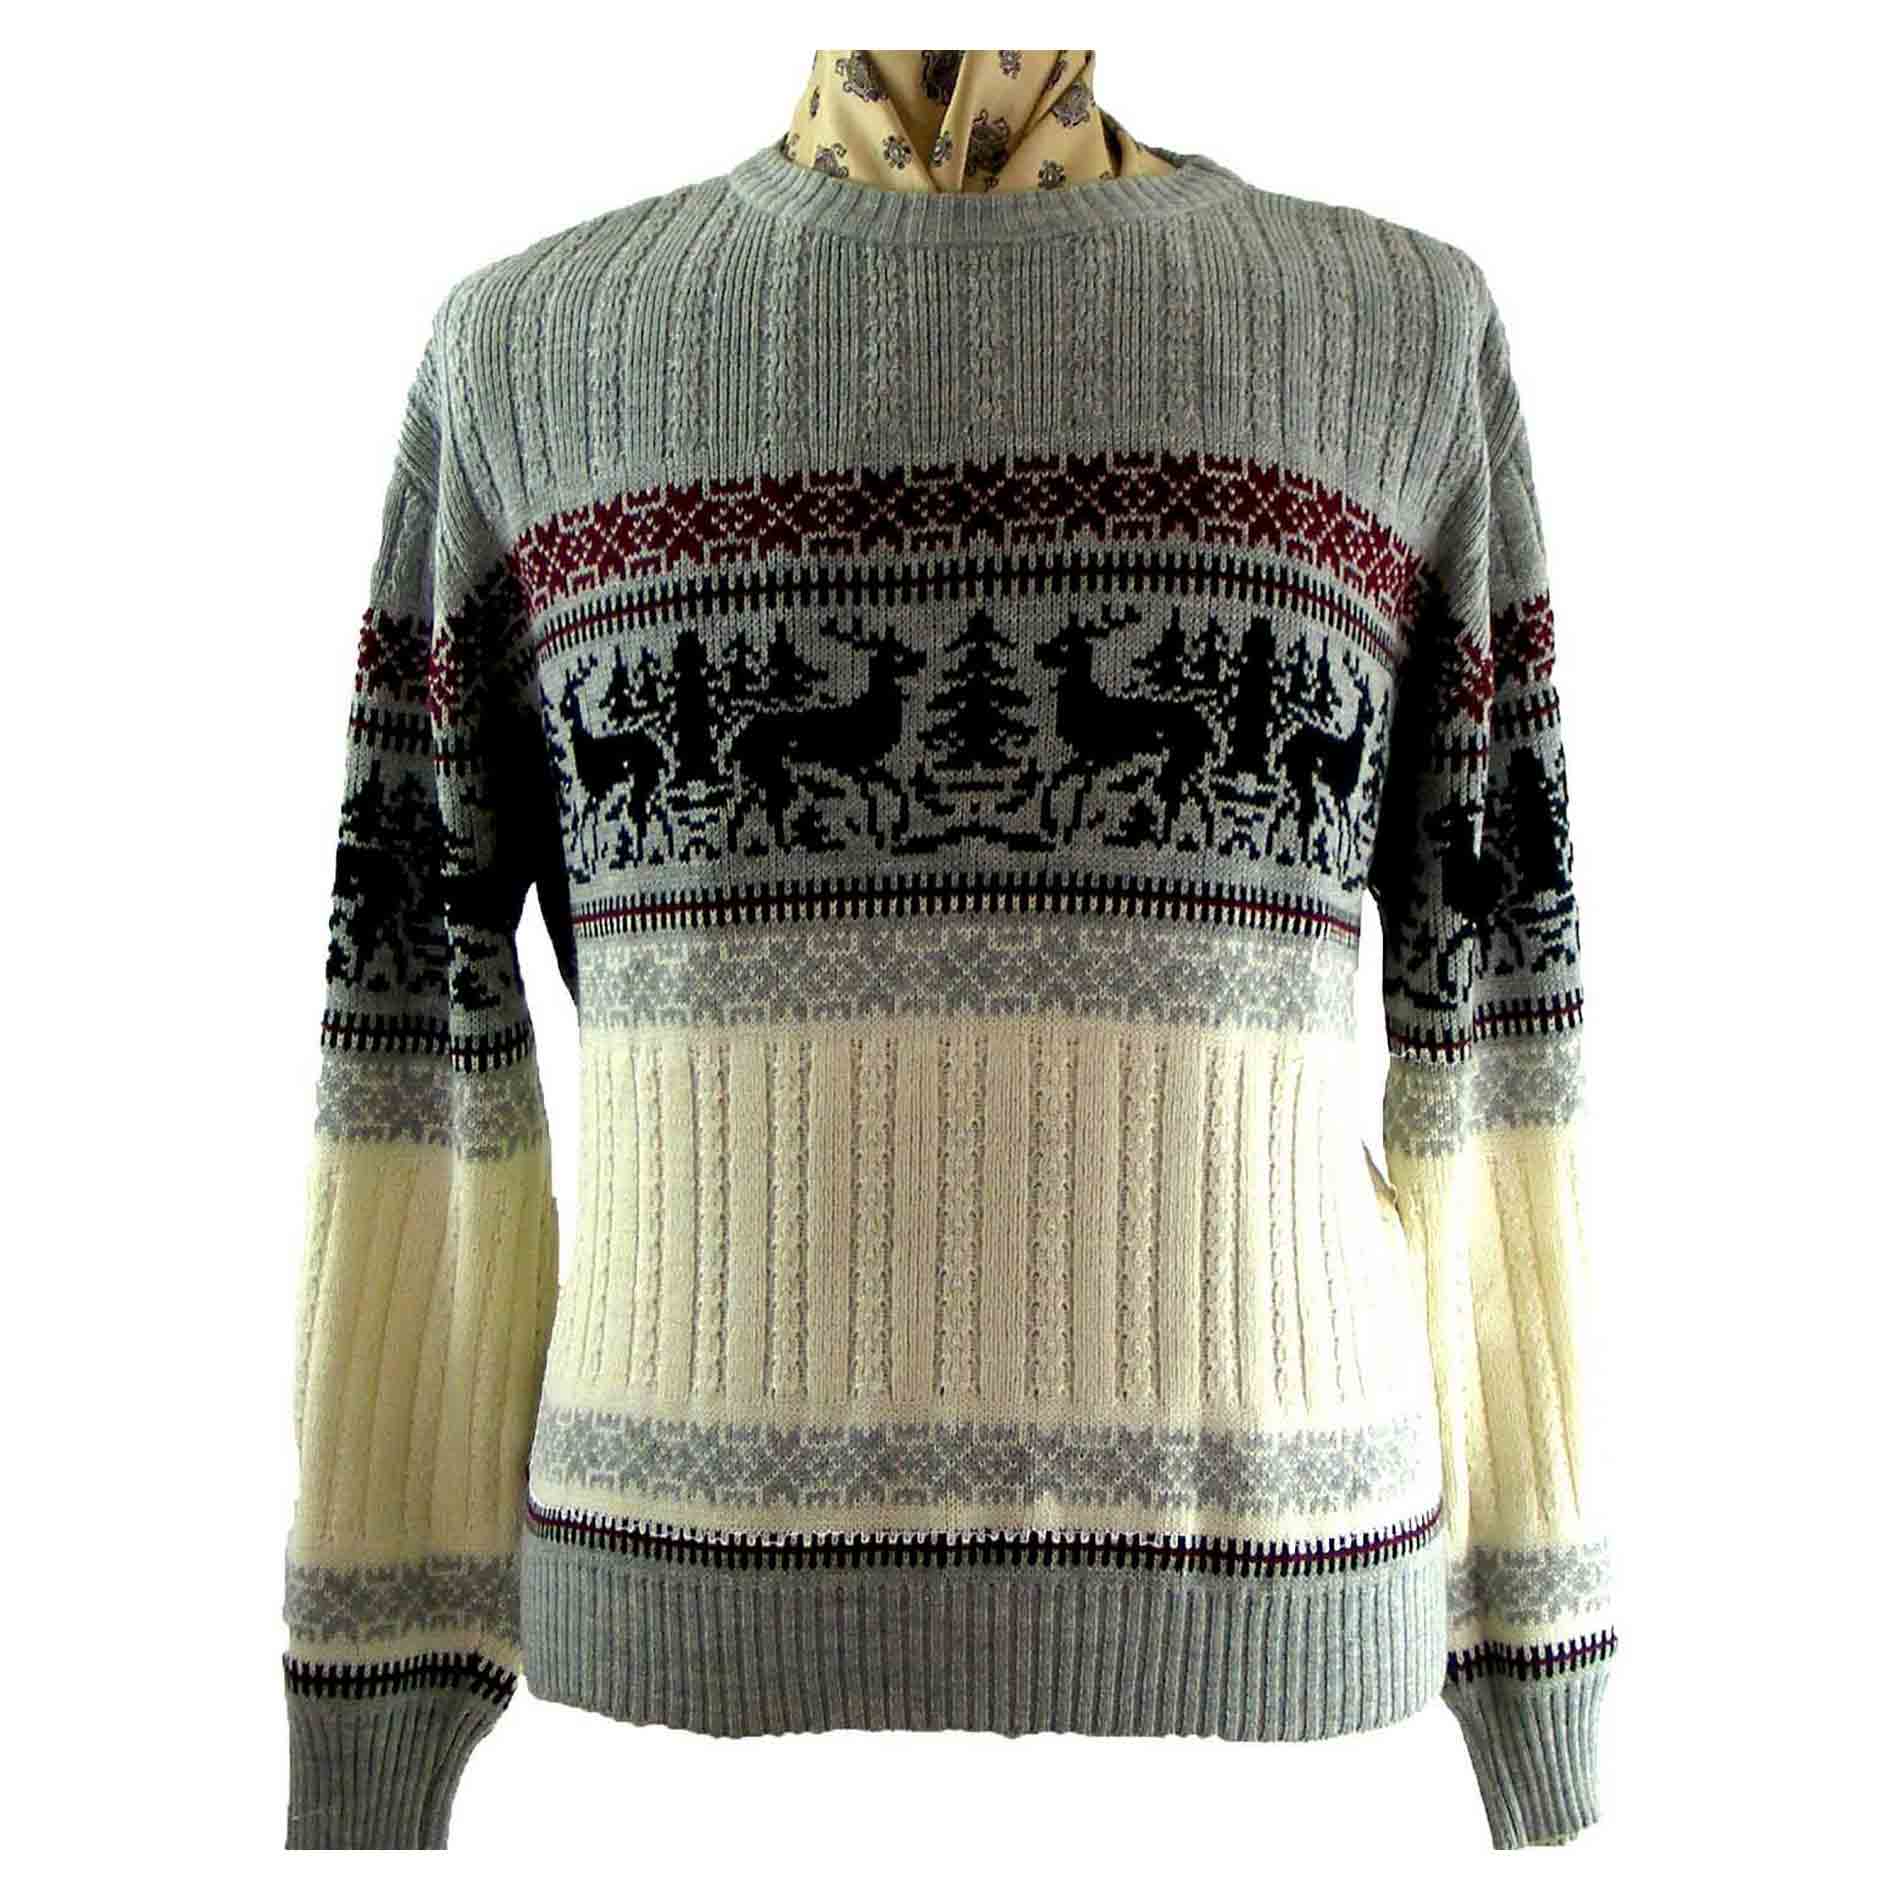 Retro Reindeer sweater - Blue 17 Vintage Clothing